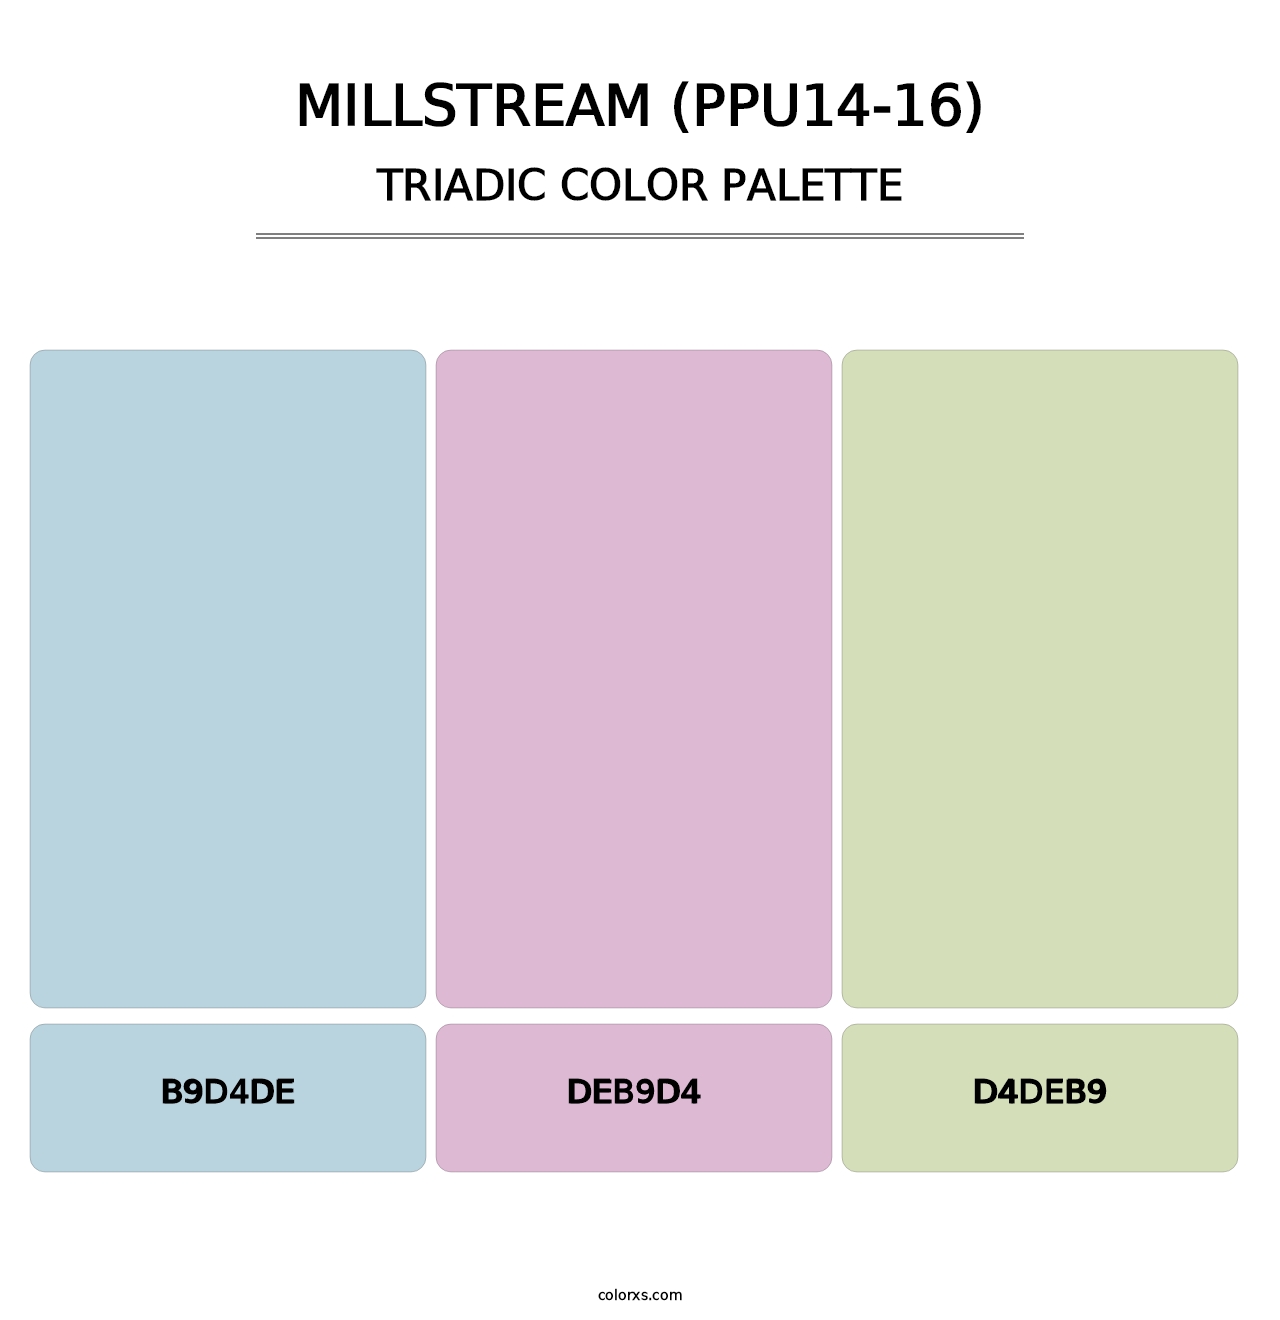 Millstream (PPU14-16) - Triadic Color Palette